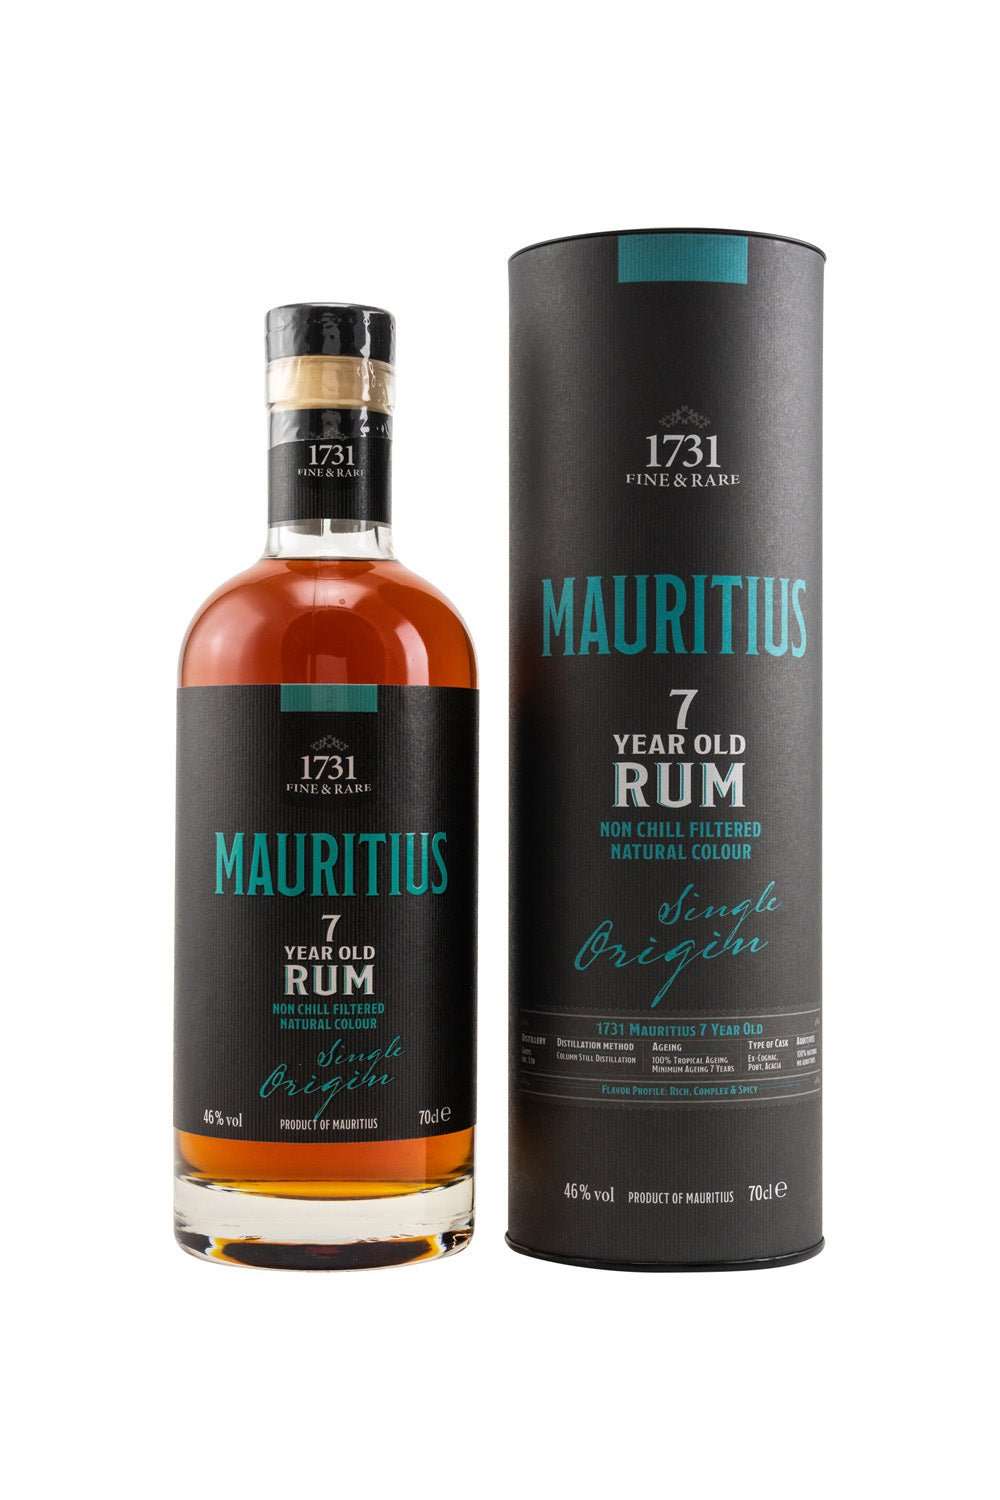 1731 Fine & Rare Mauritius (Grays Inc. Ltd) 7 years old Rum 46% vol. 700ml - Maltimore